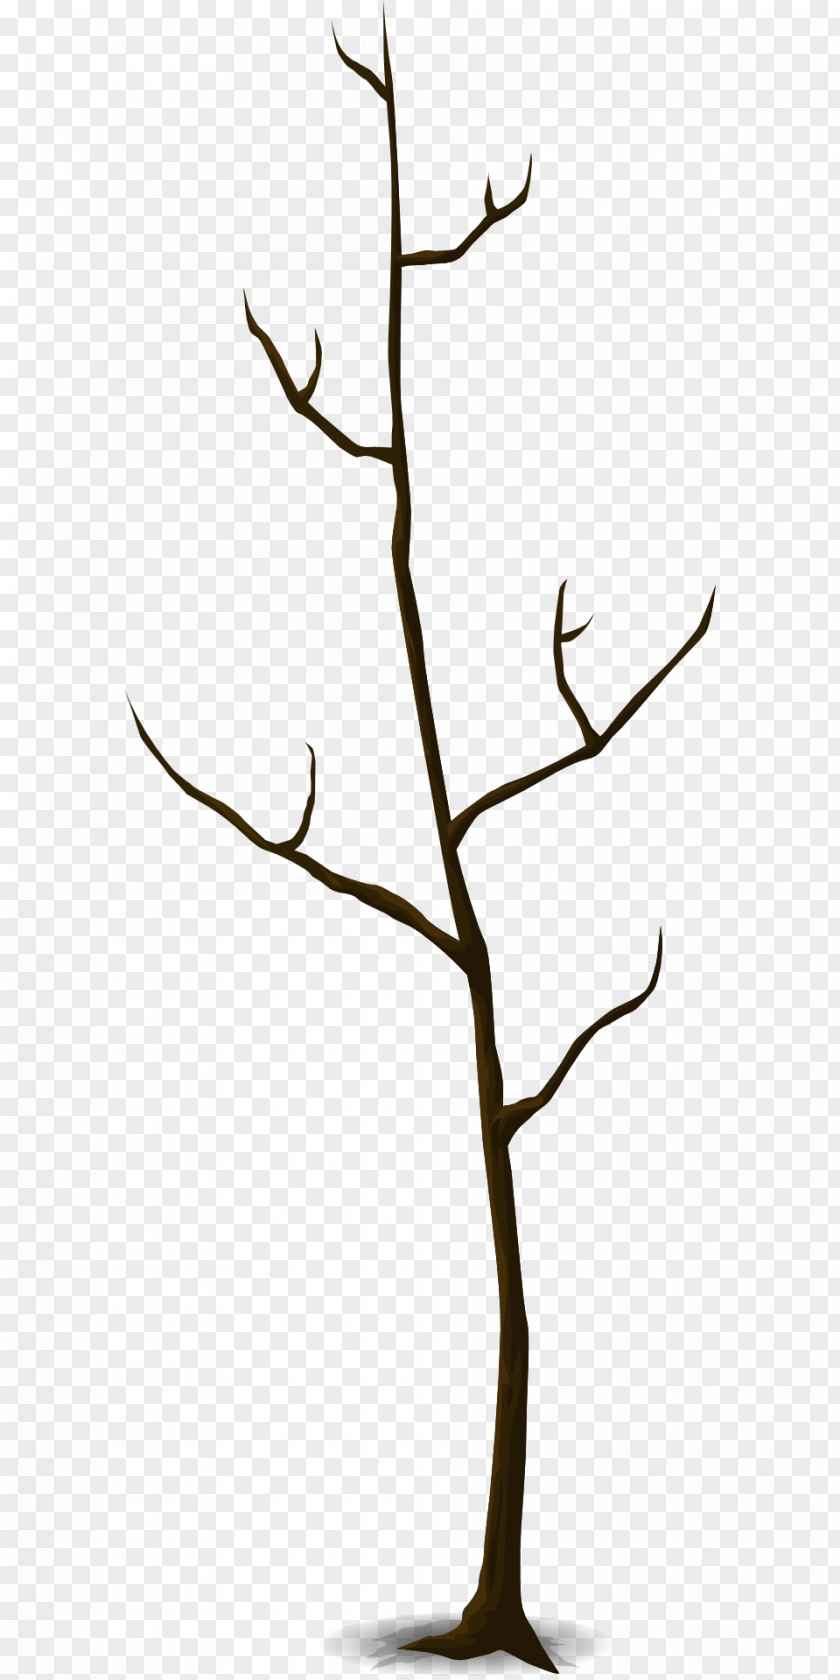 Leaf Twig Trunk Tree Branch PNG